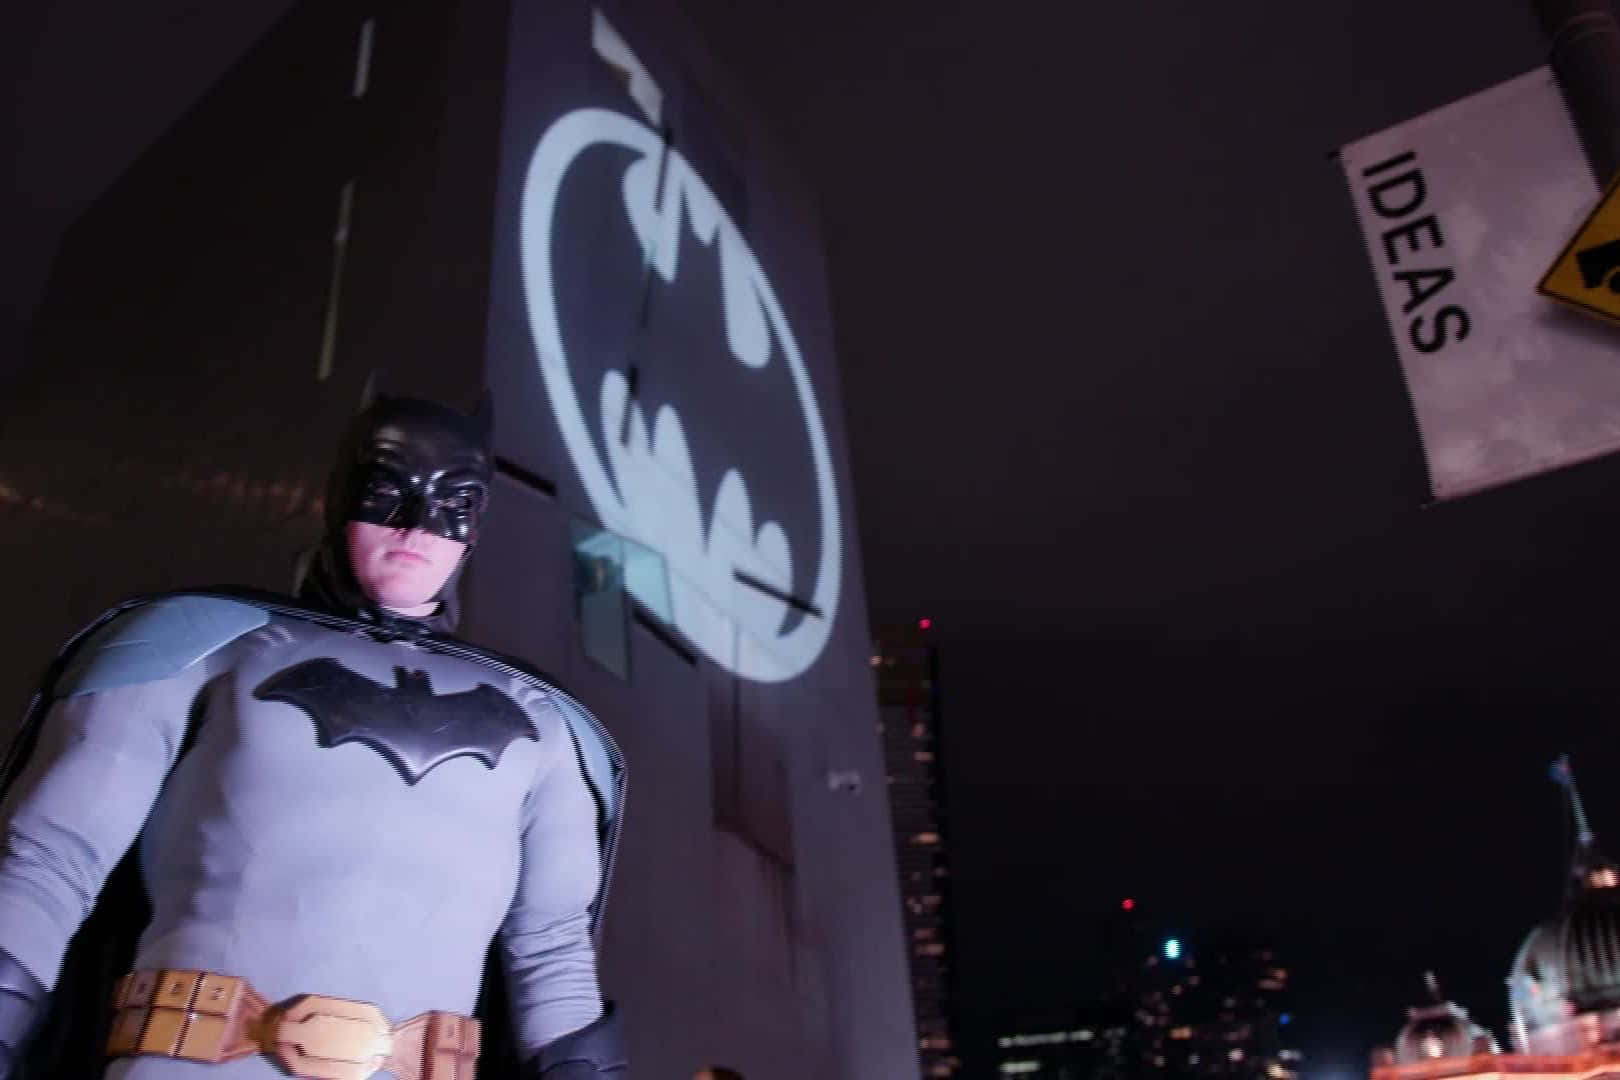 The iconic Bat Signal lighting up the night sky Wallpaper